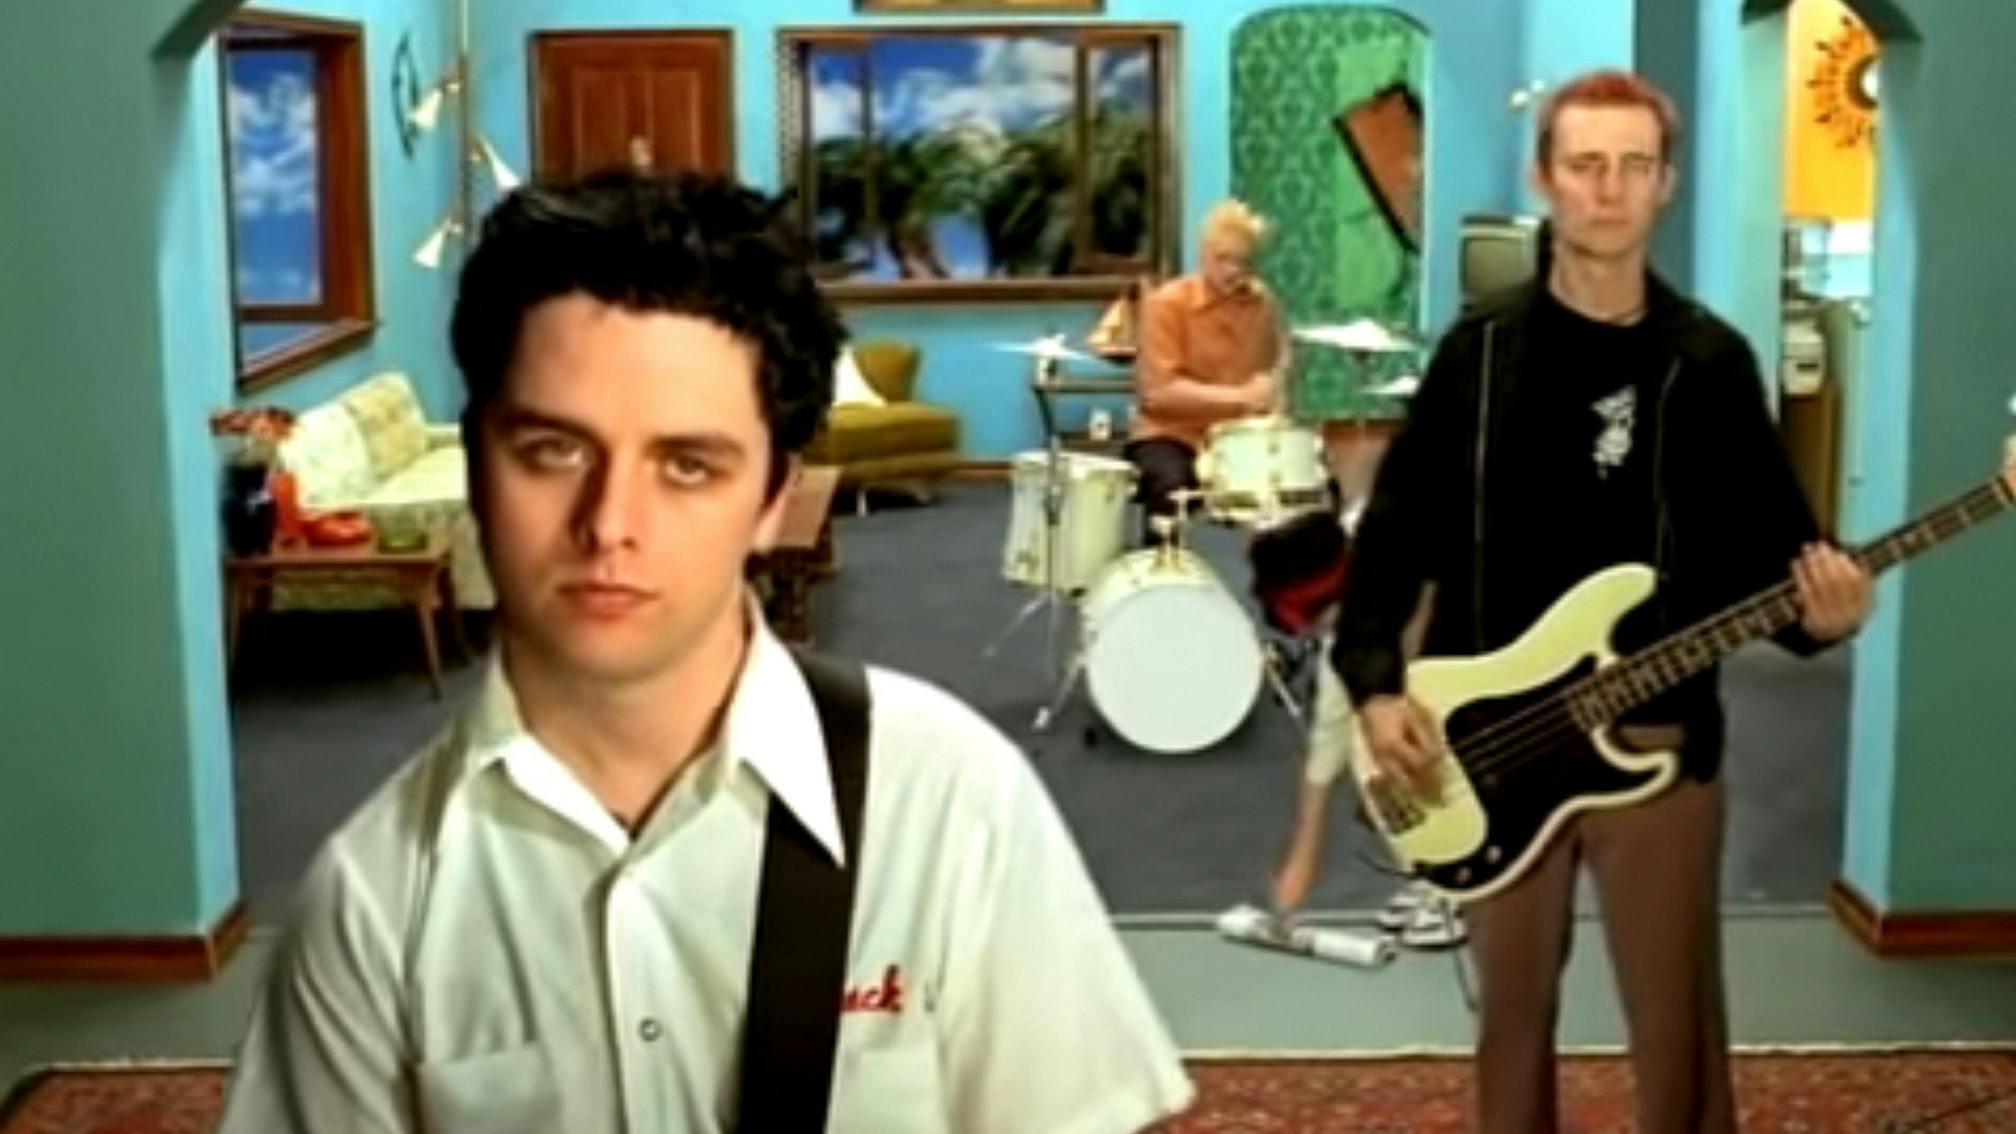 The Best Green Day Album? Duh, It’s Nimrod